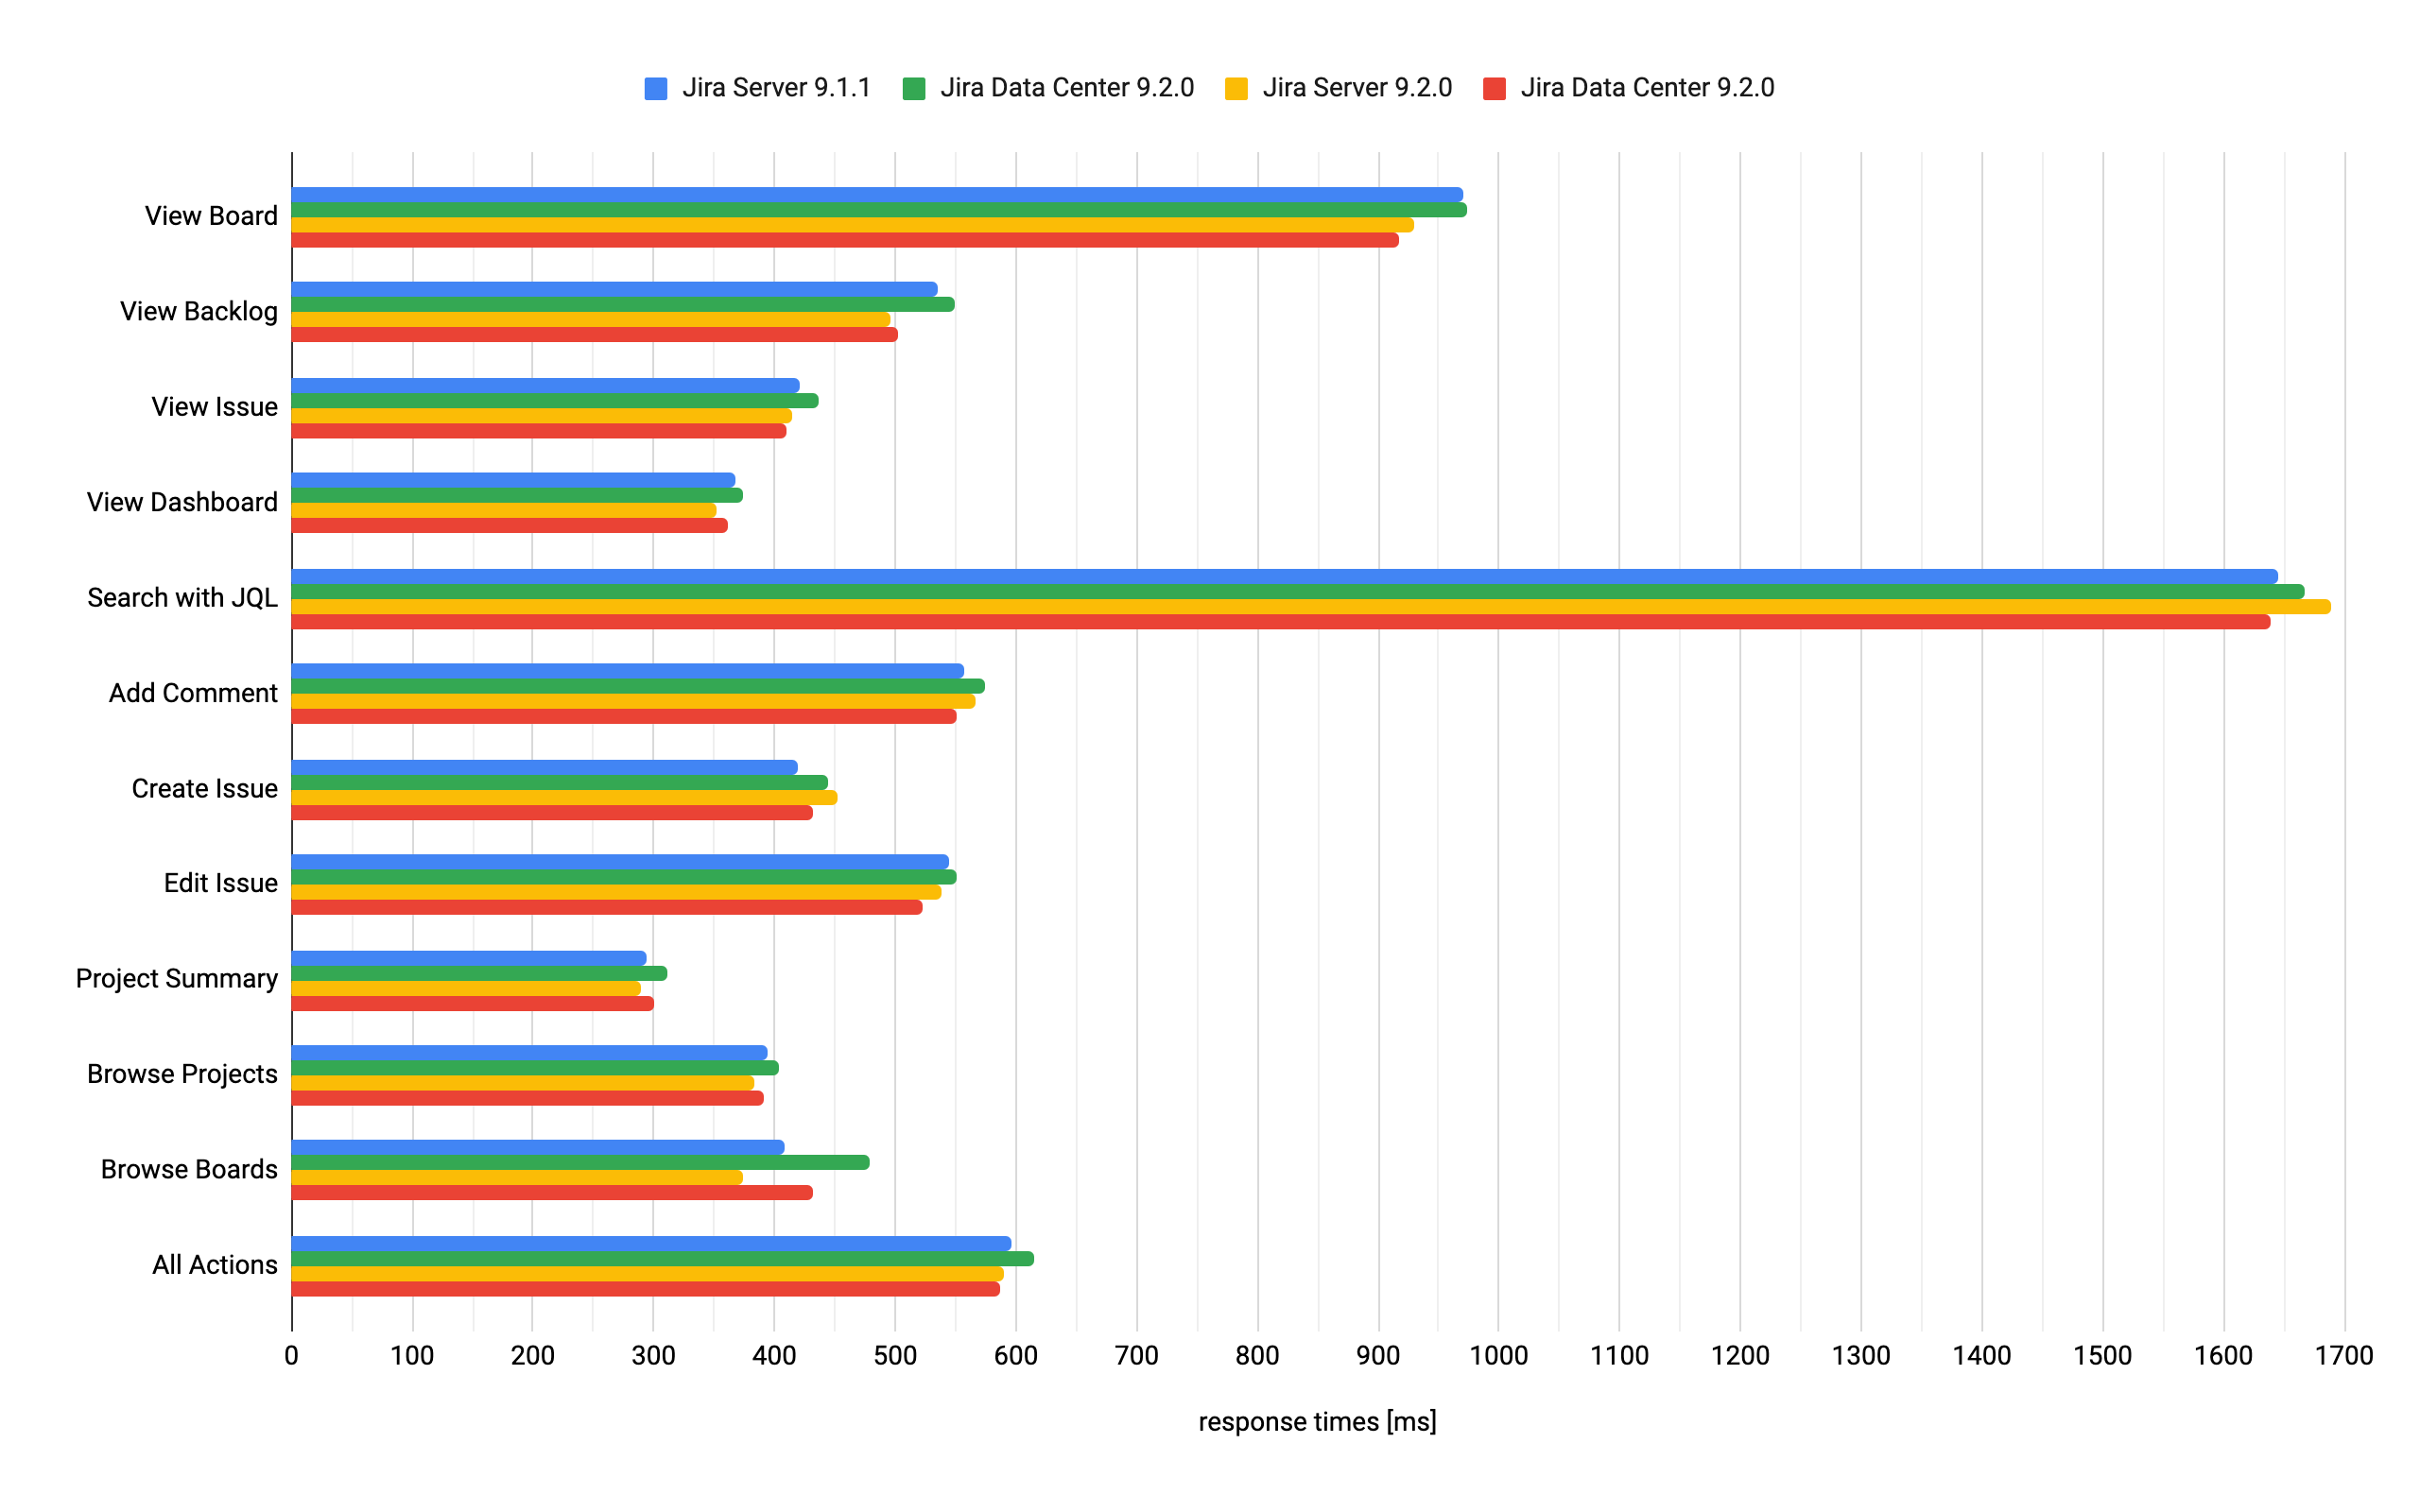 Jira 9.2.0 vs. 9.1.1 performance summary per action (2 million issues)